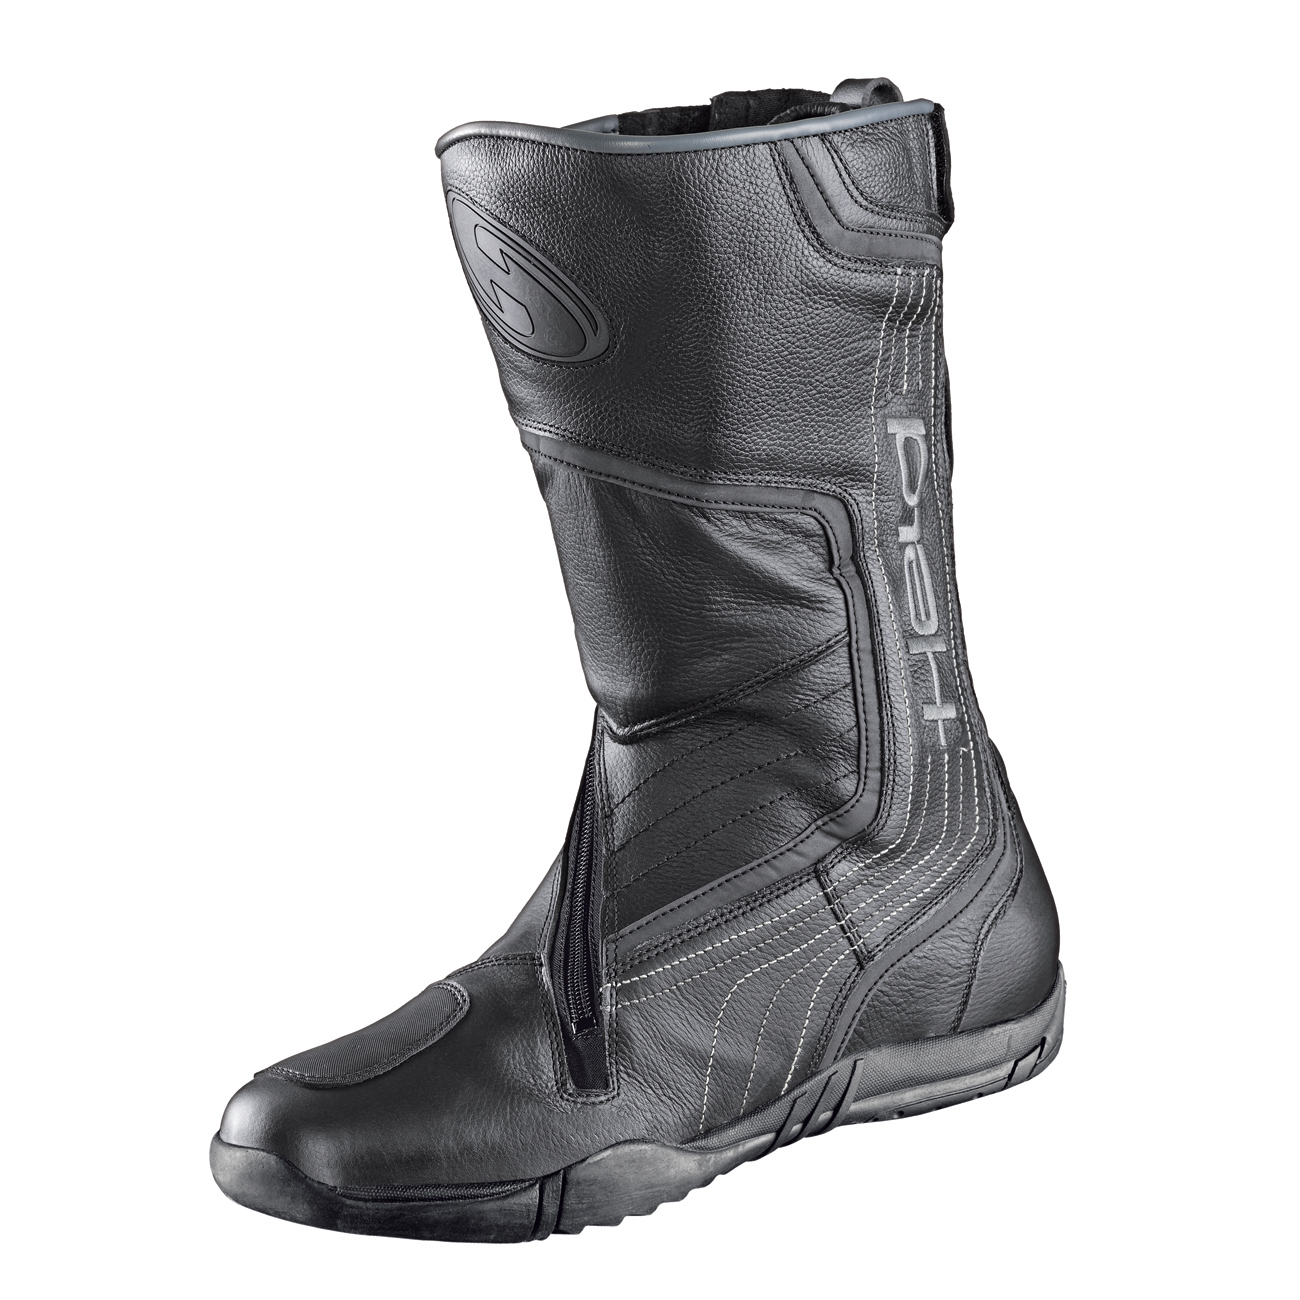 HELD 8530-01 Conan boots (black)